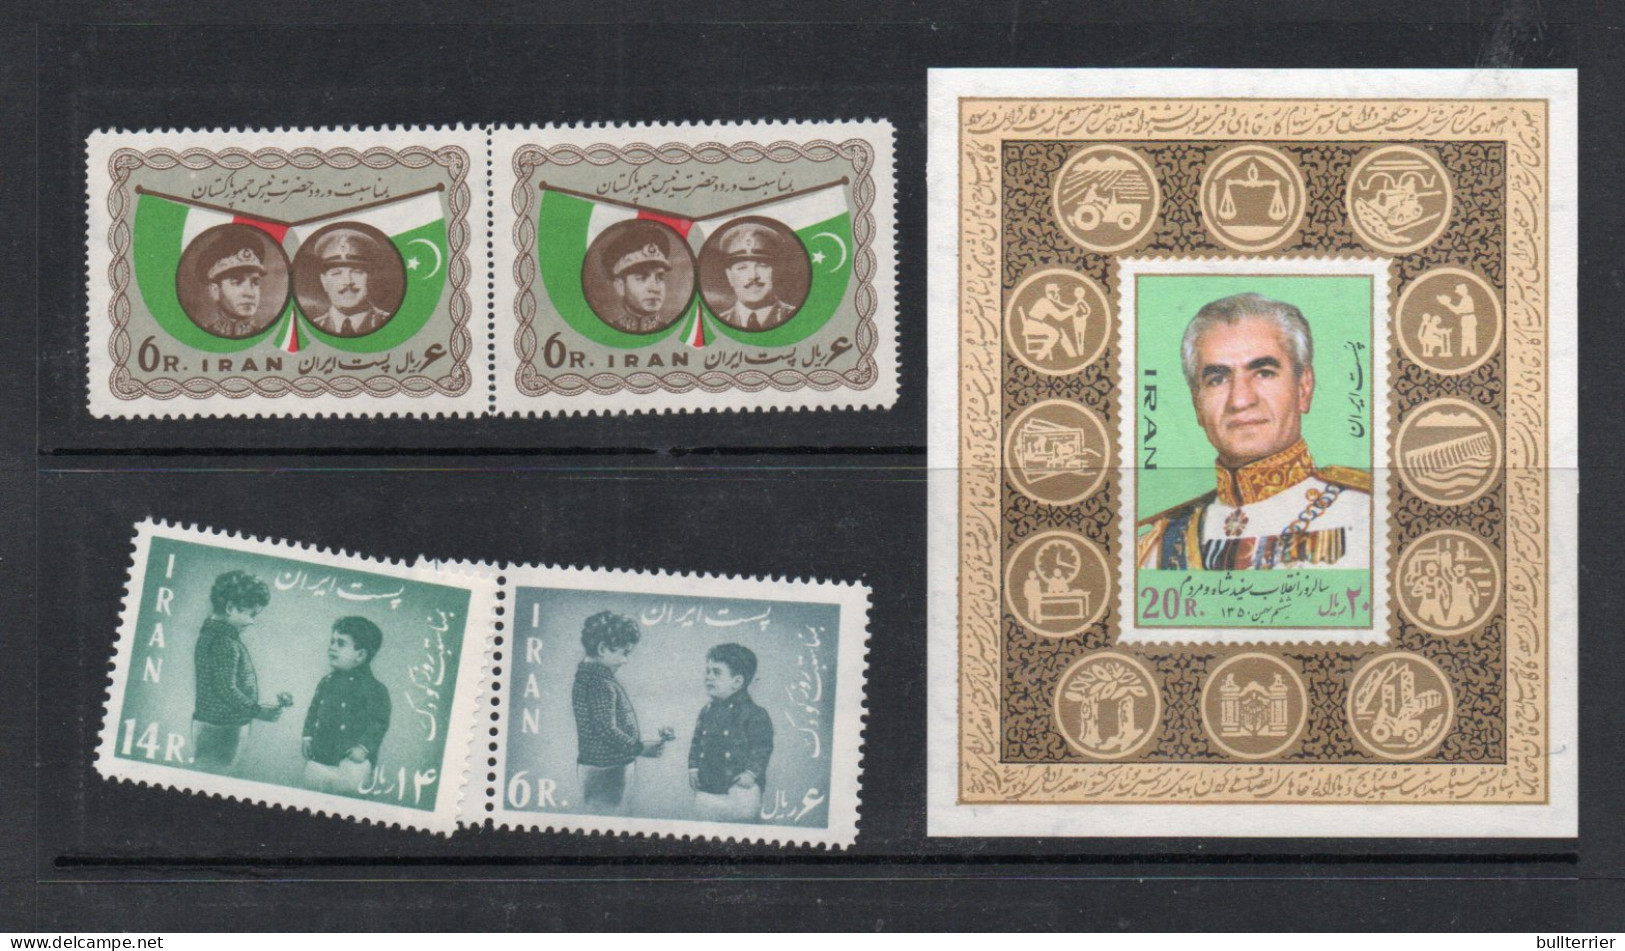 IRAN - 1959 PAKISTAN VISIT,1962 CROWN PRINCE SET, AND 1972 SHAH 9TH ANNIV S/SHEET  MINT NEVER HINGED,  SG £34+ - Iran